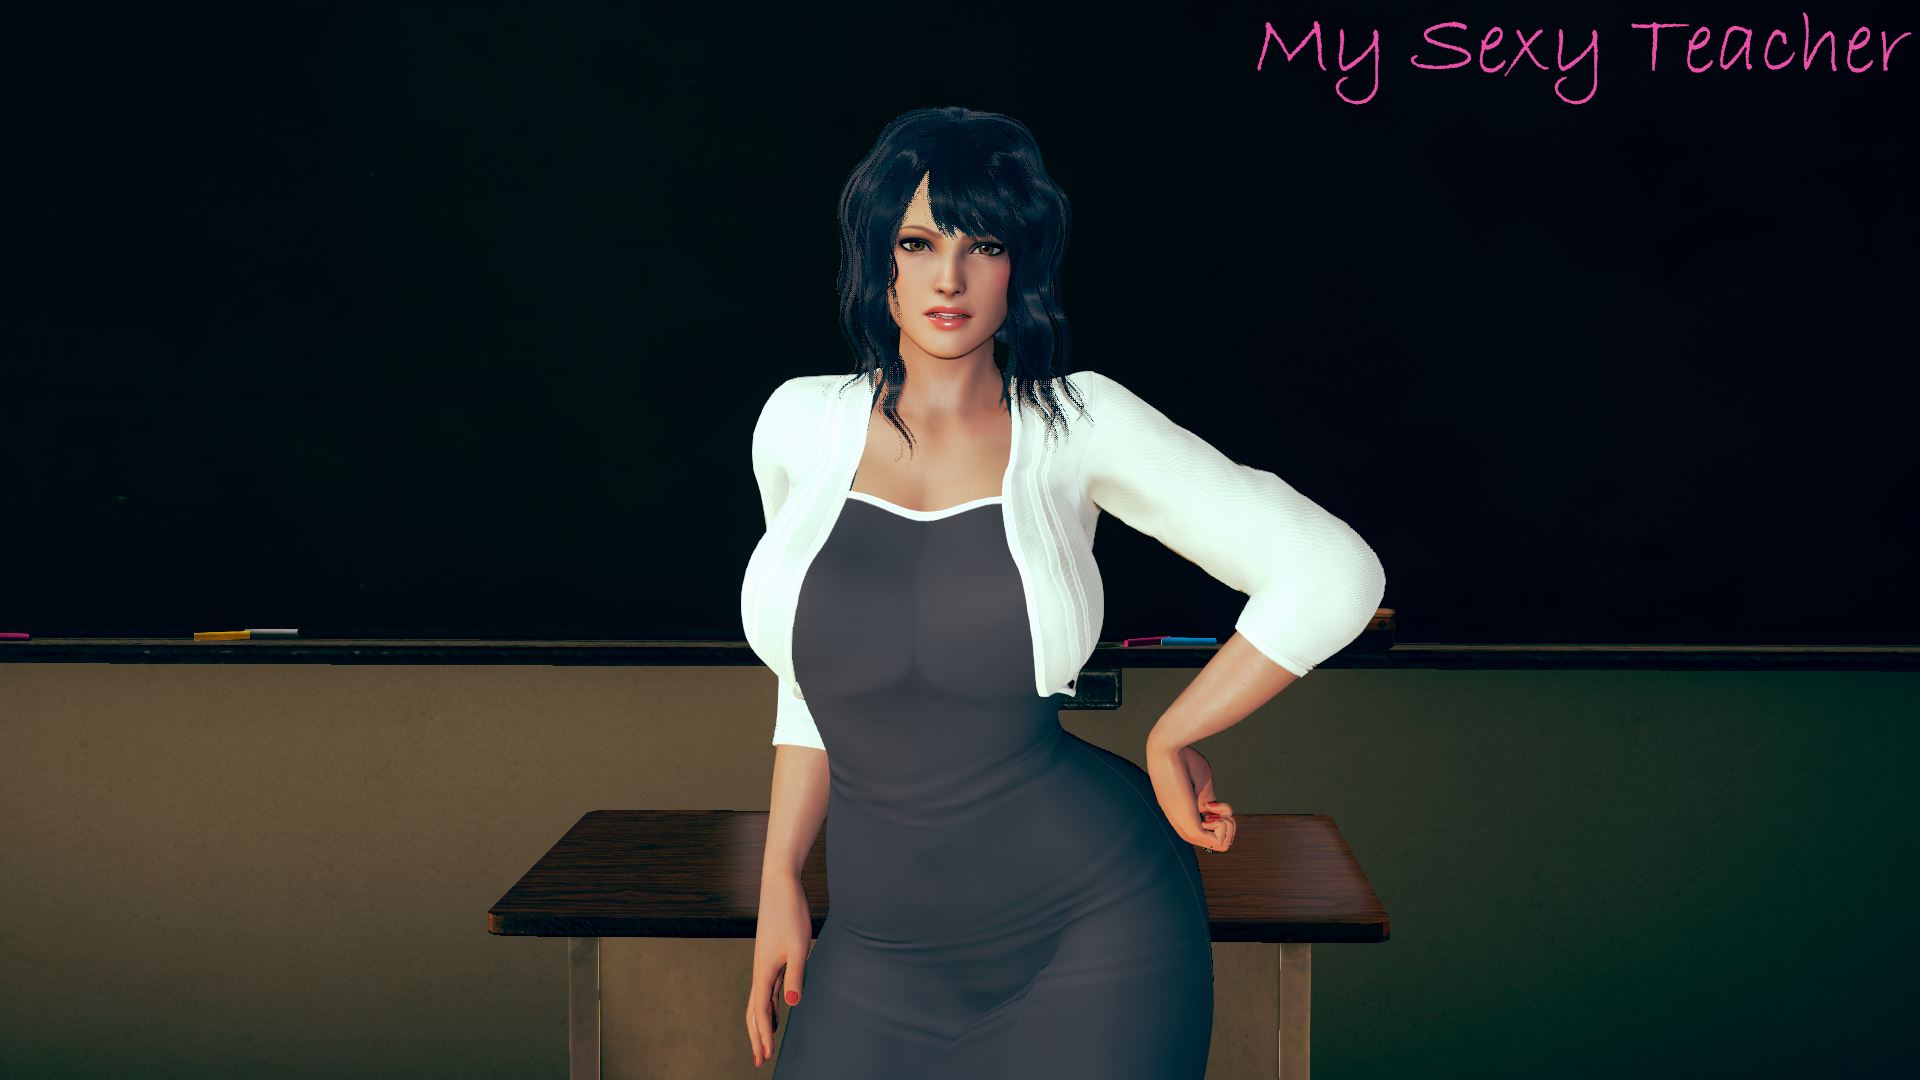 Teacher Sexy Download - Ren'Py] My Sexy Teacher - v0.05 by Sitayo 18+ Adult xxx Porn Game Download